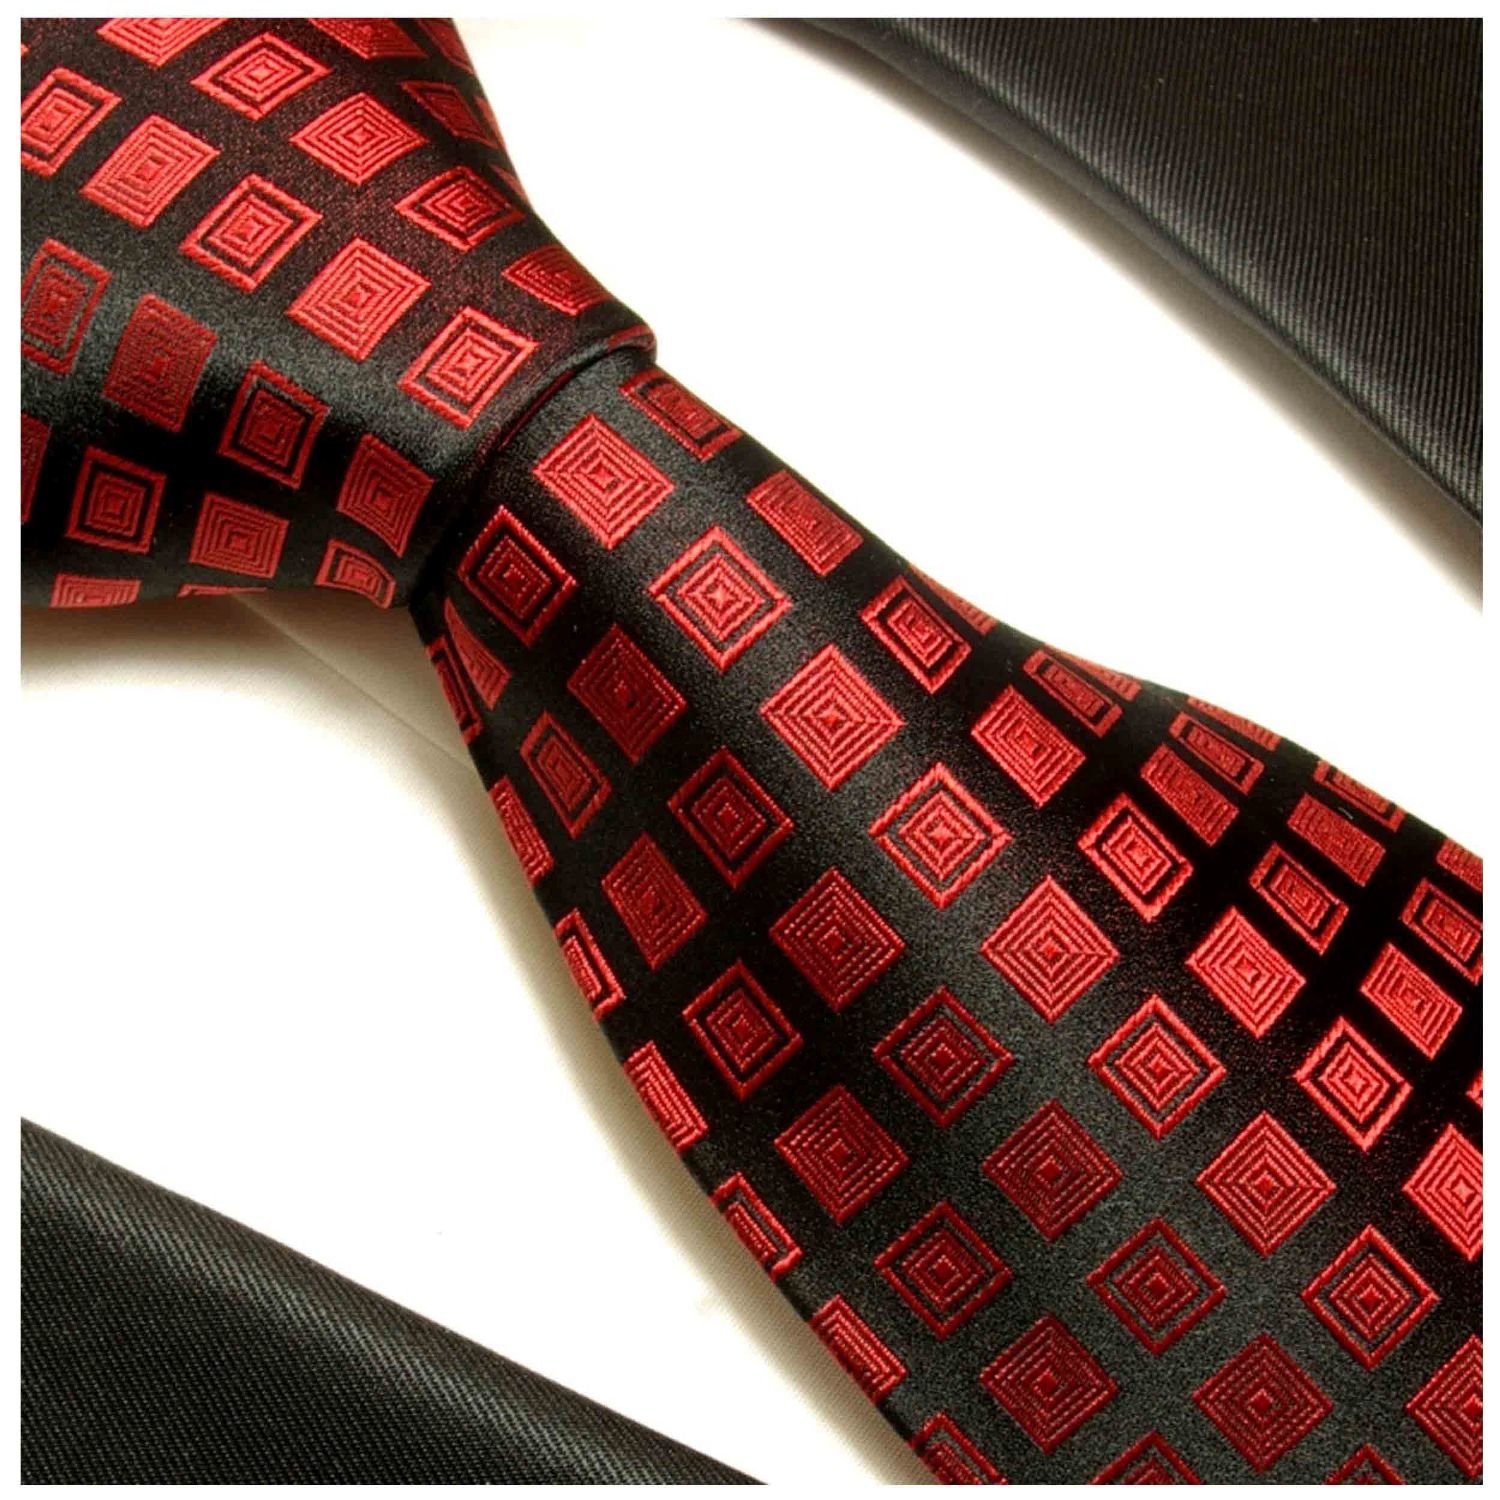 Paul Malone Krawatte Designer Seidenkrawatte 764 100% Seide Herren Schlips modern kariert rot (6cm), Schmal schwarz